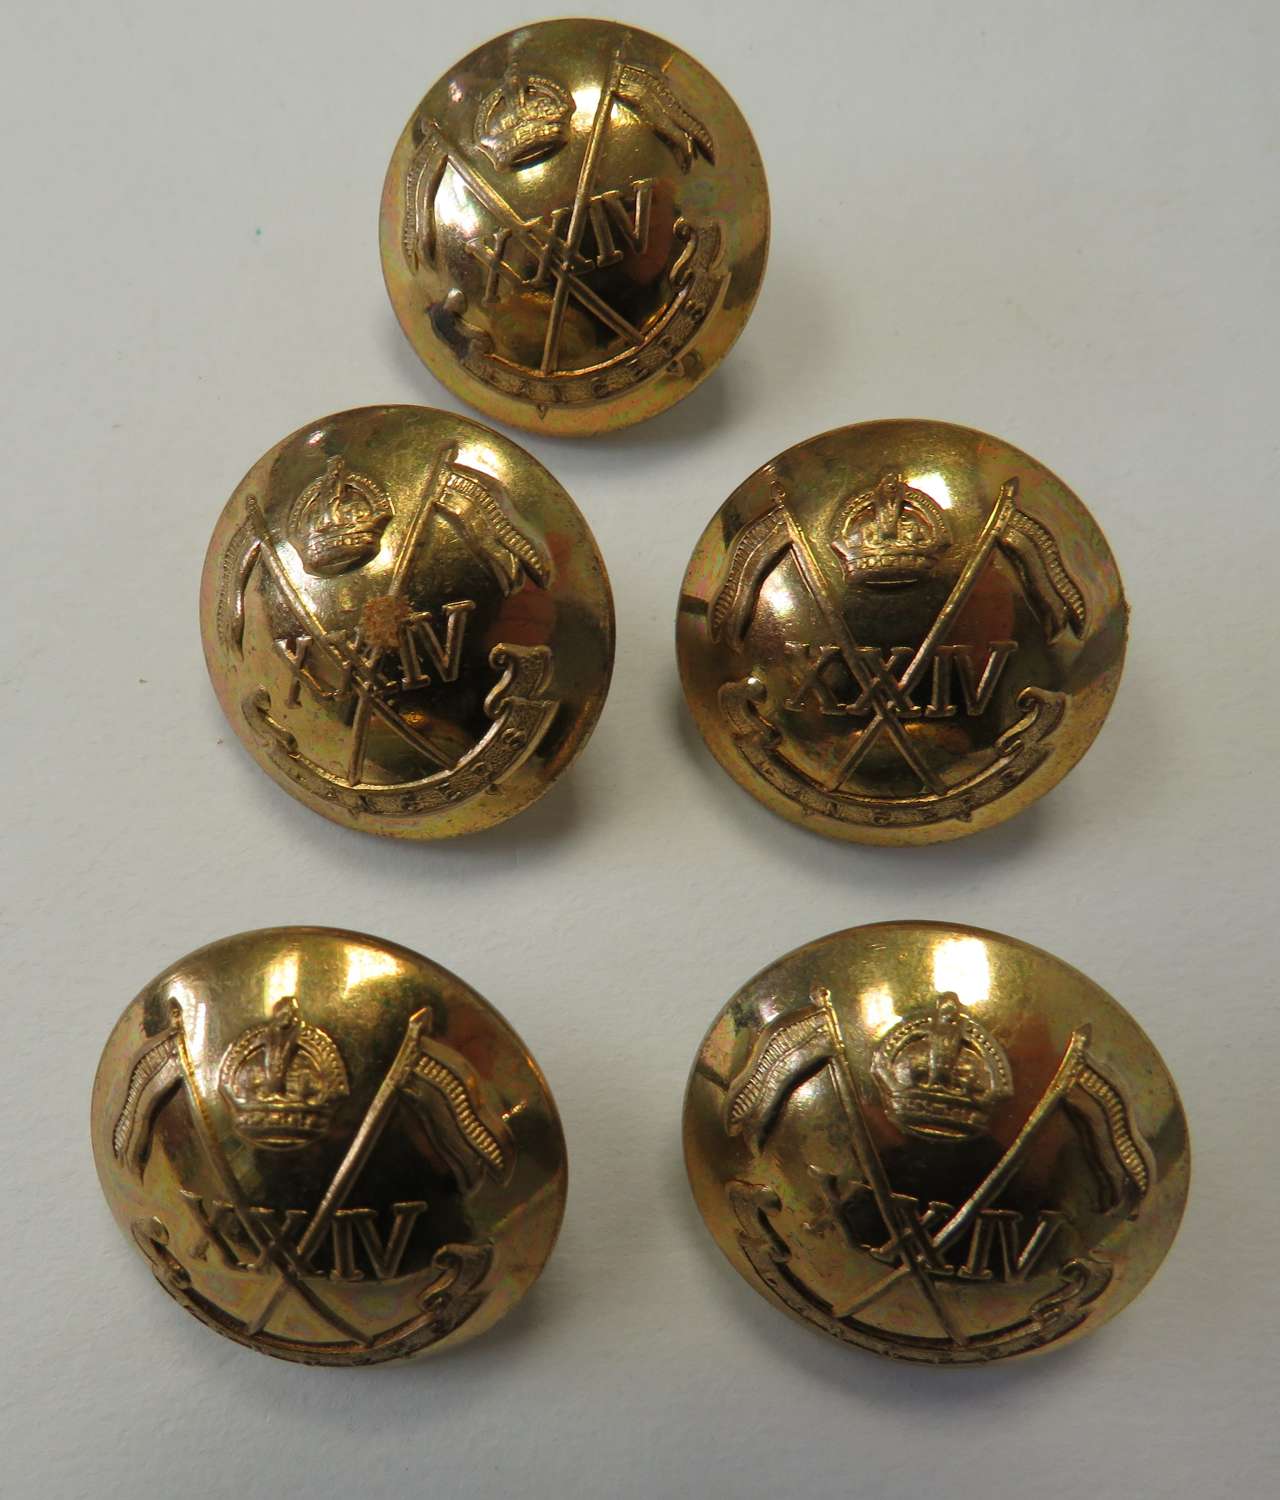 Five 24th Lancers Large Gilt Buttons